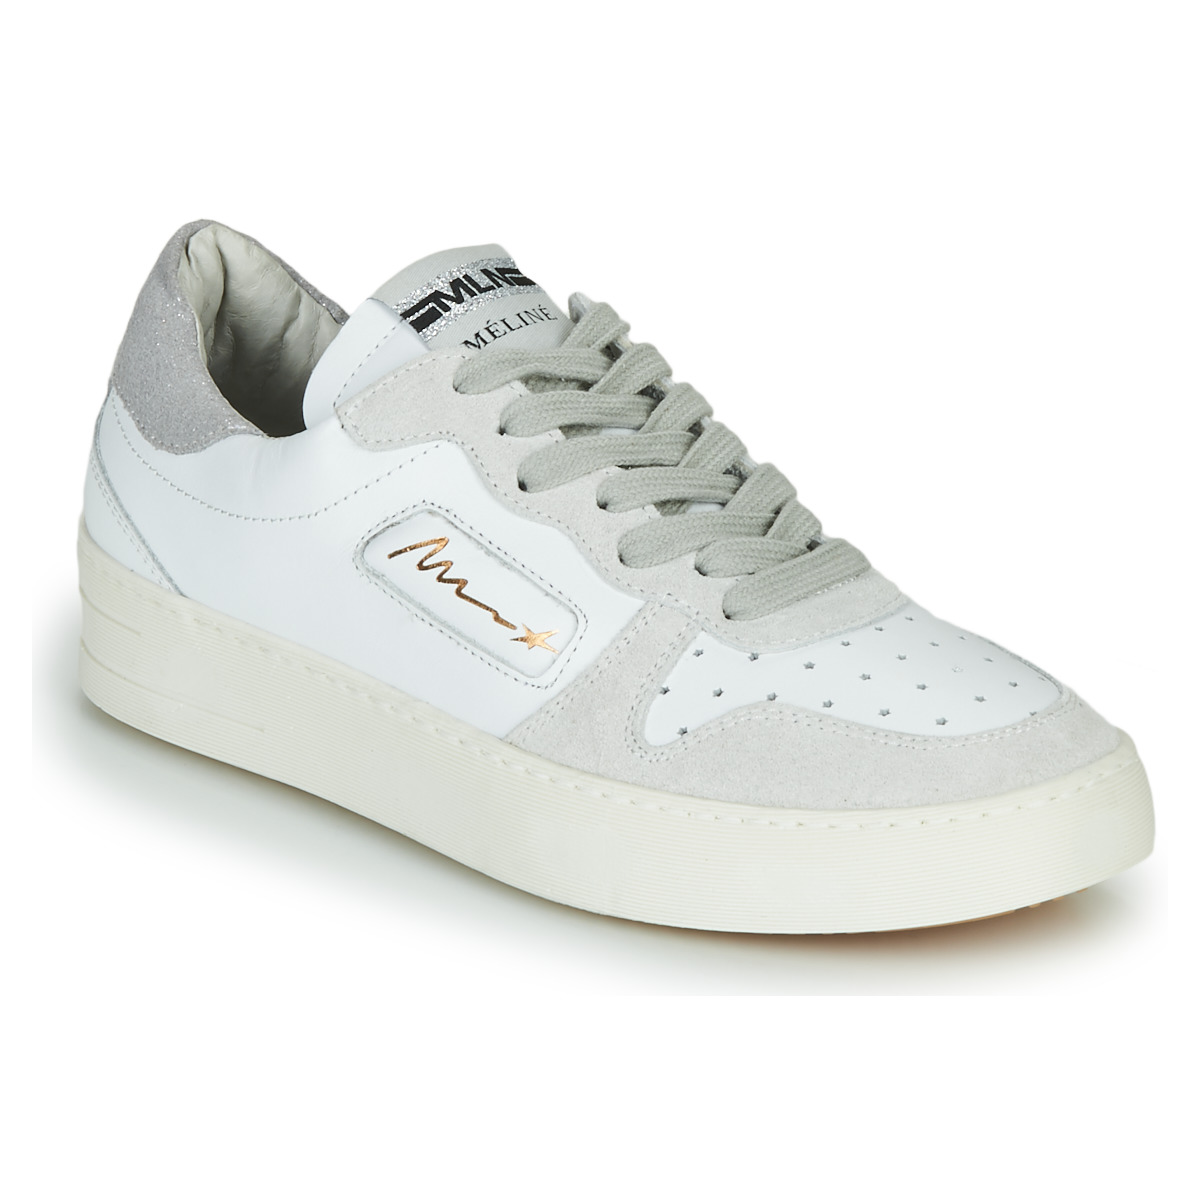 Sko Dame Lave sneakers Meline STRA-A-1060 Hvid / Beige